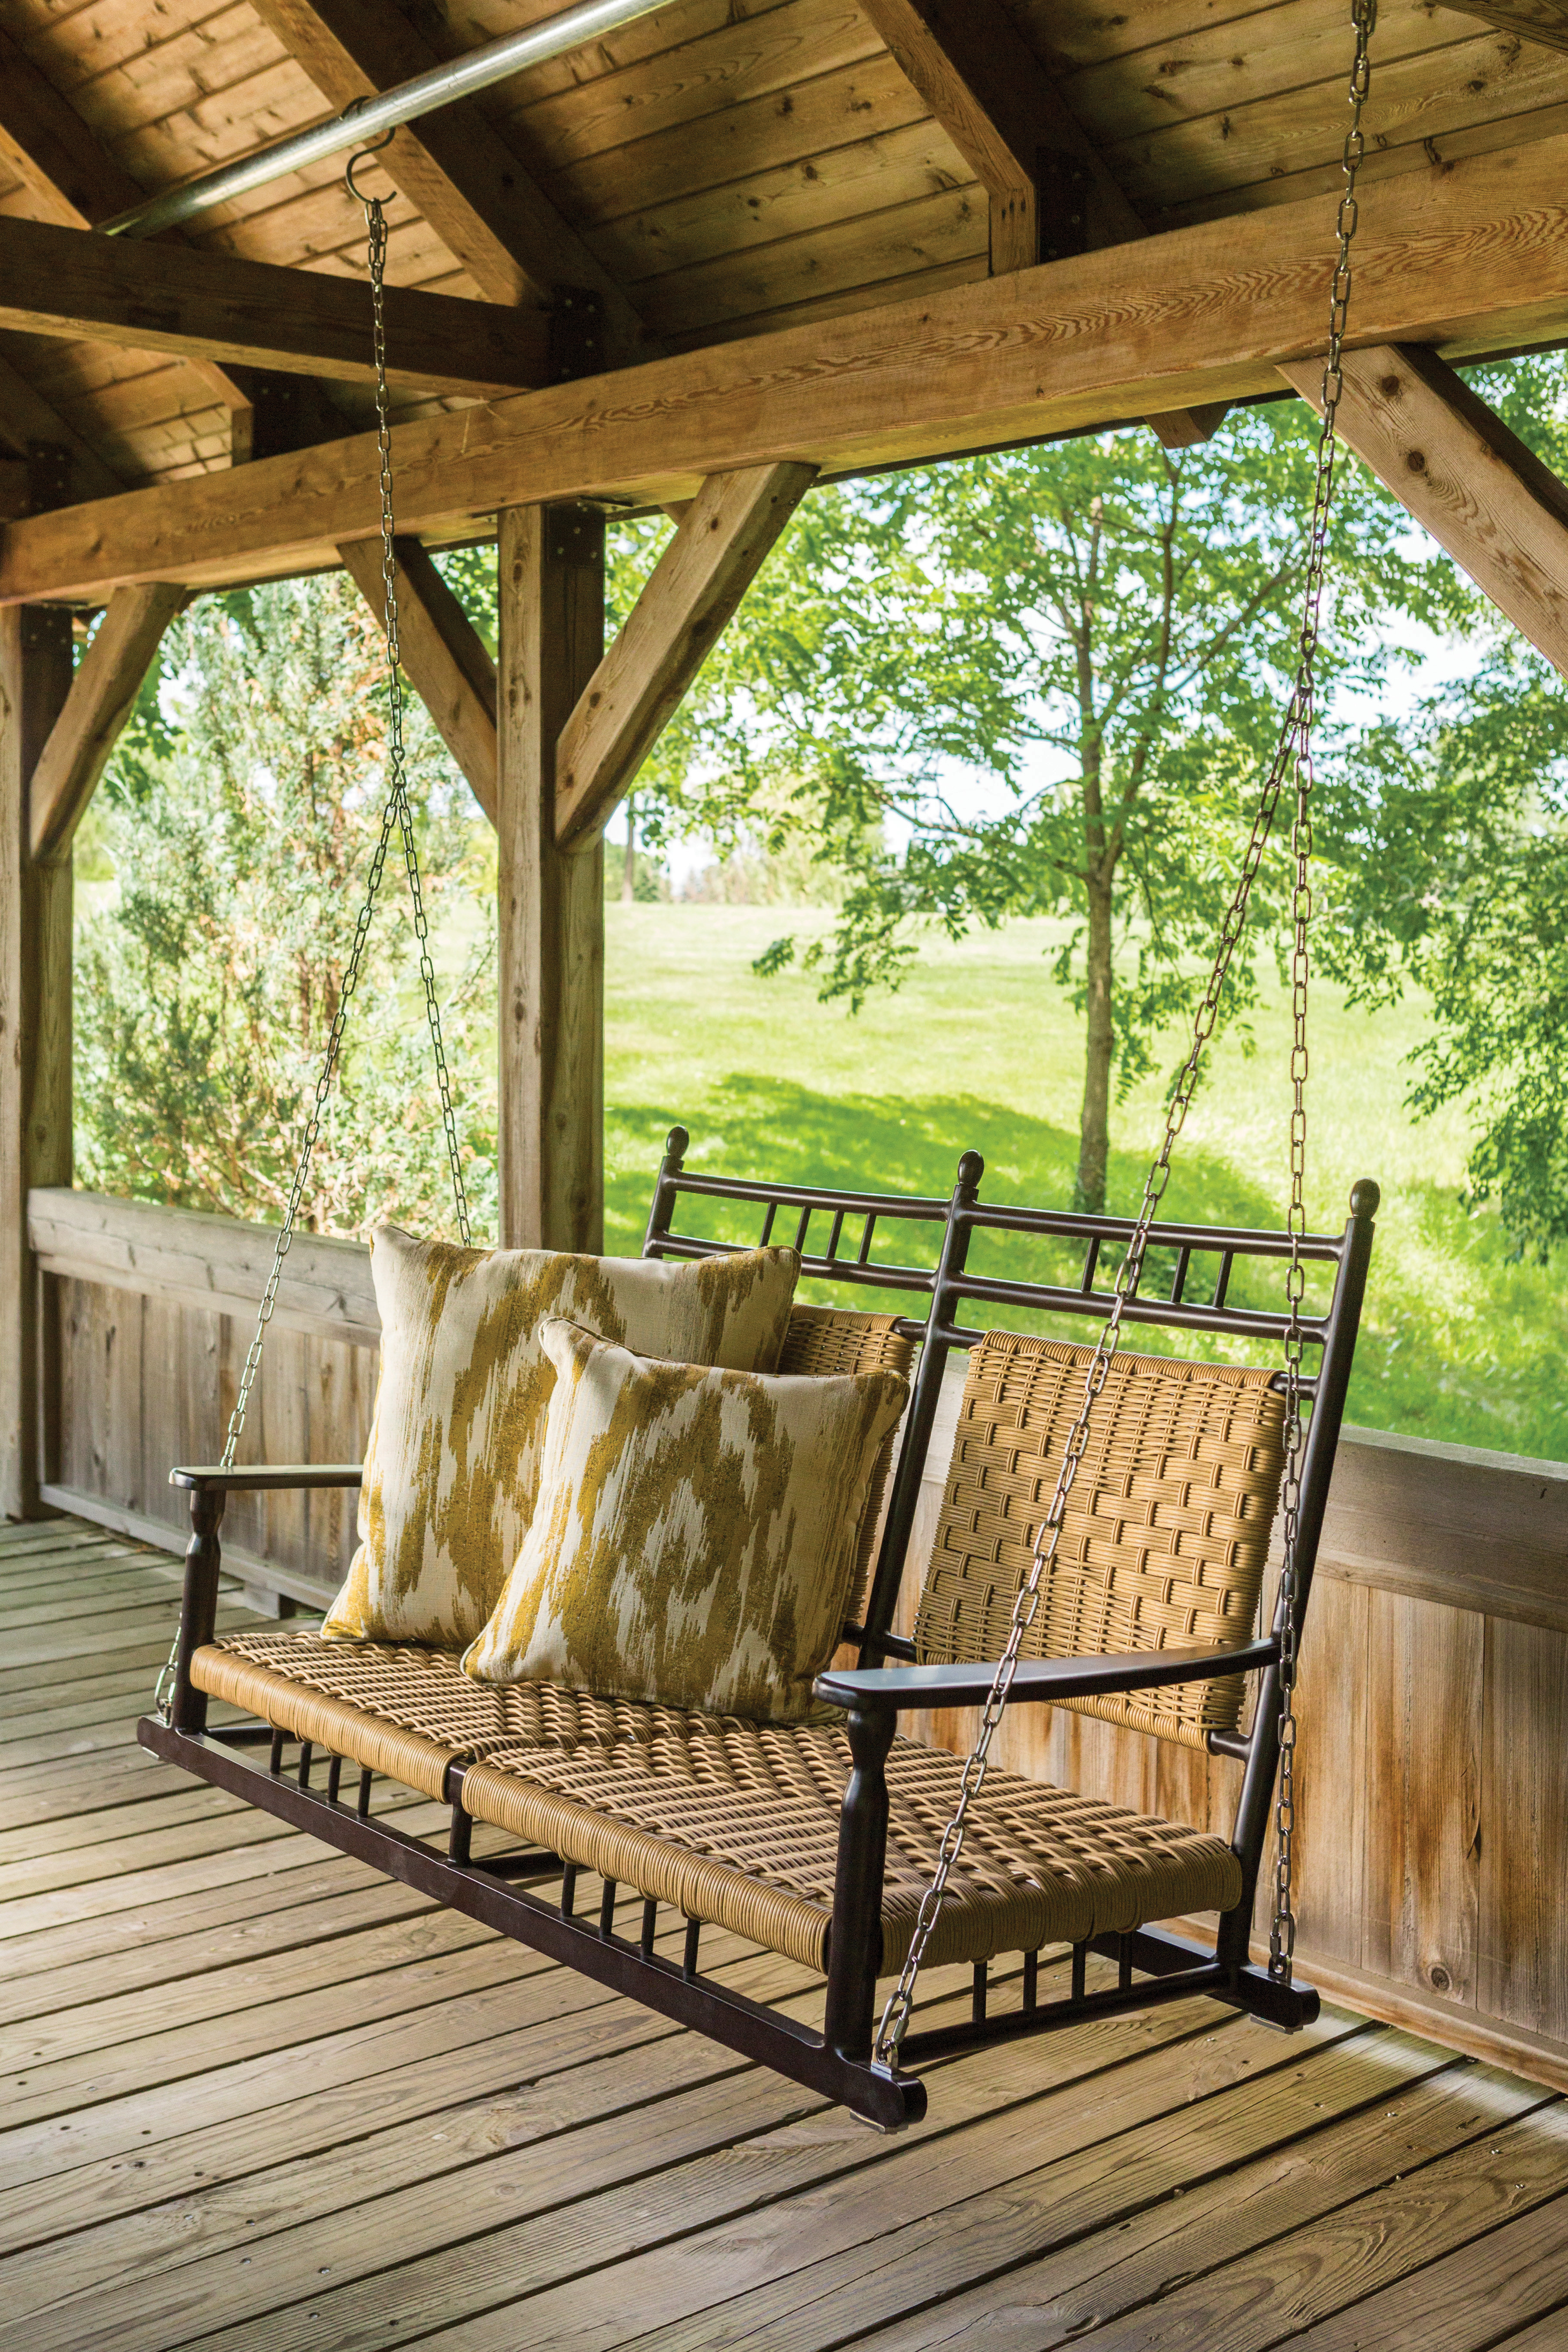 Item | Lloyd Flanders - Premium outdoor furniture in all-weather ...